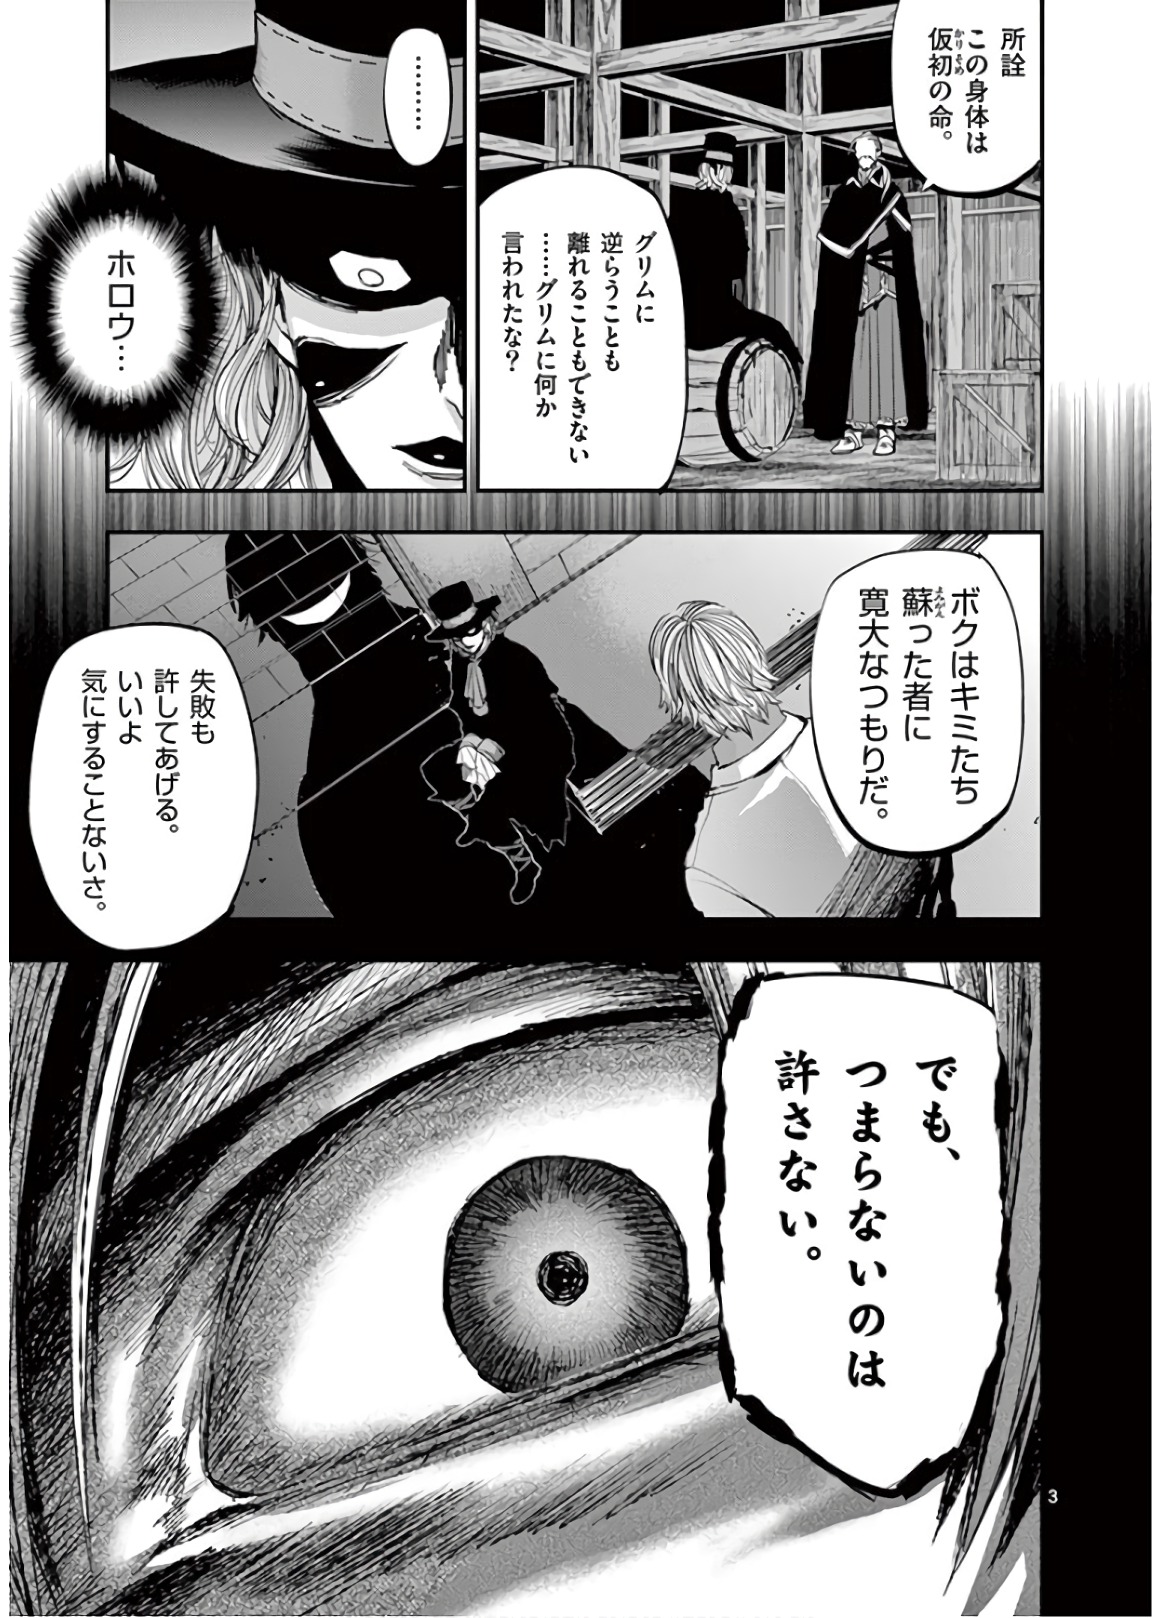 Ginrou Bloodborne - Chapter 62 - Page 3